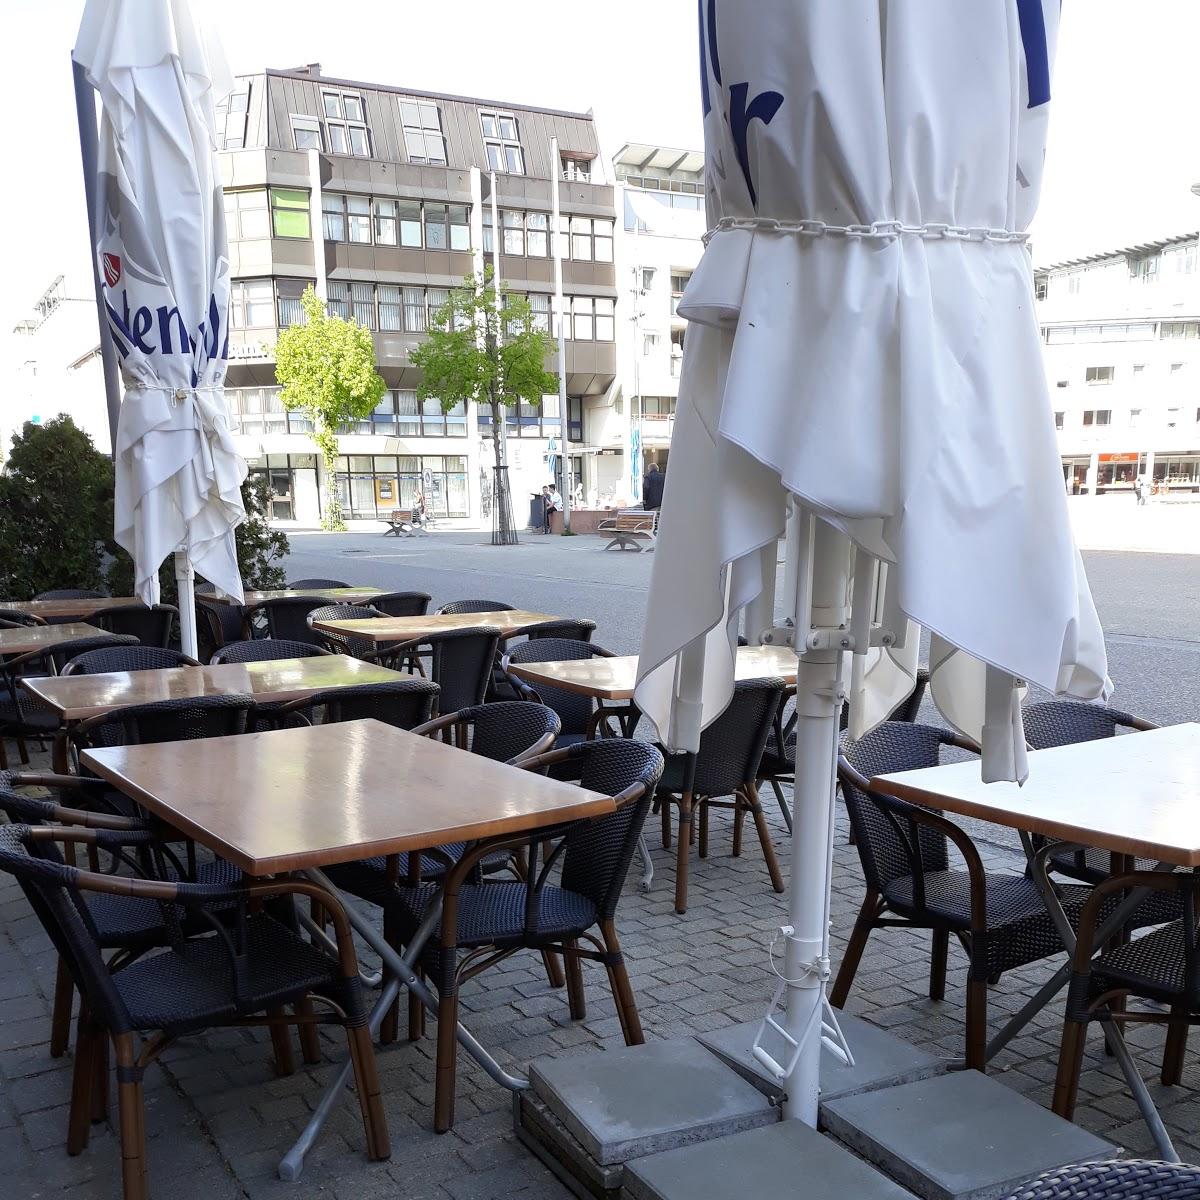 Restaurant "Café am Markt Inh. Jens Schiele" in Heidenheim an der Brenz